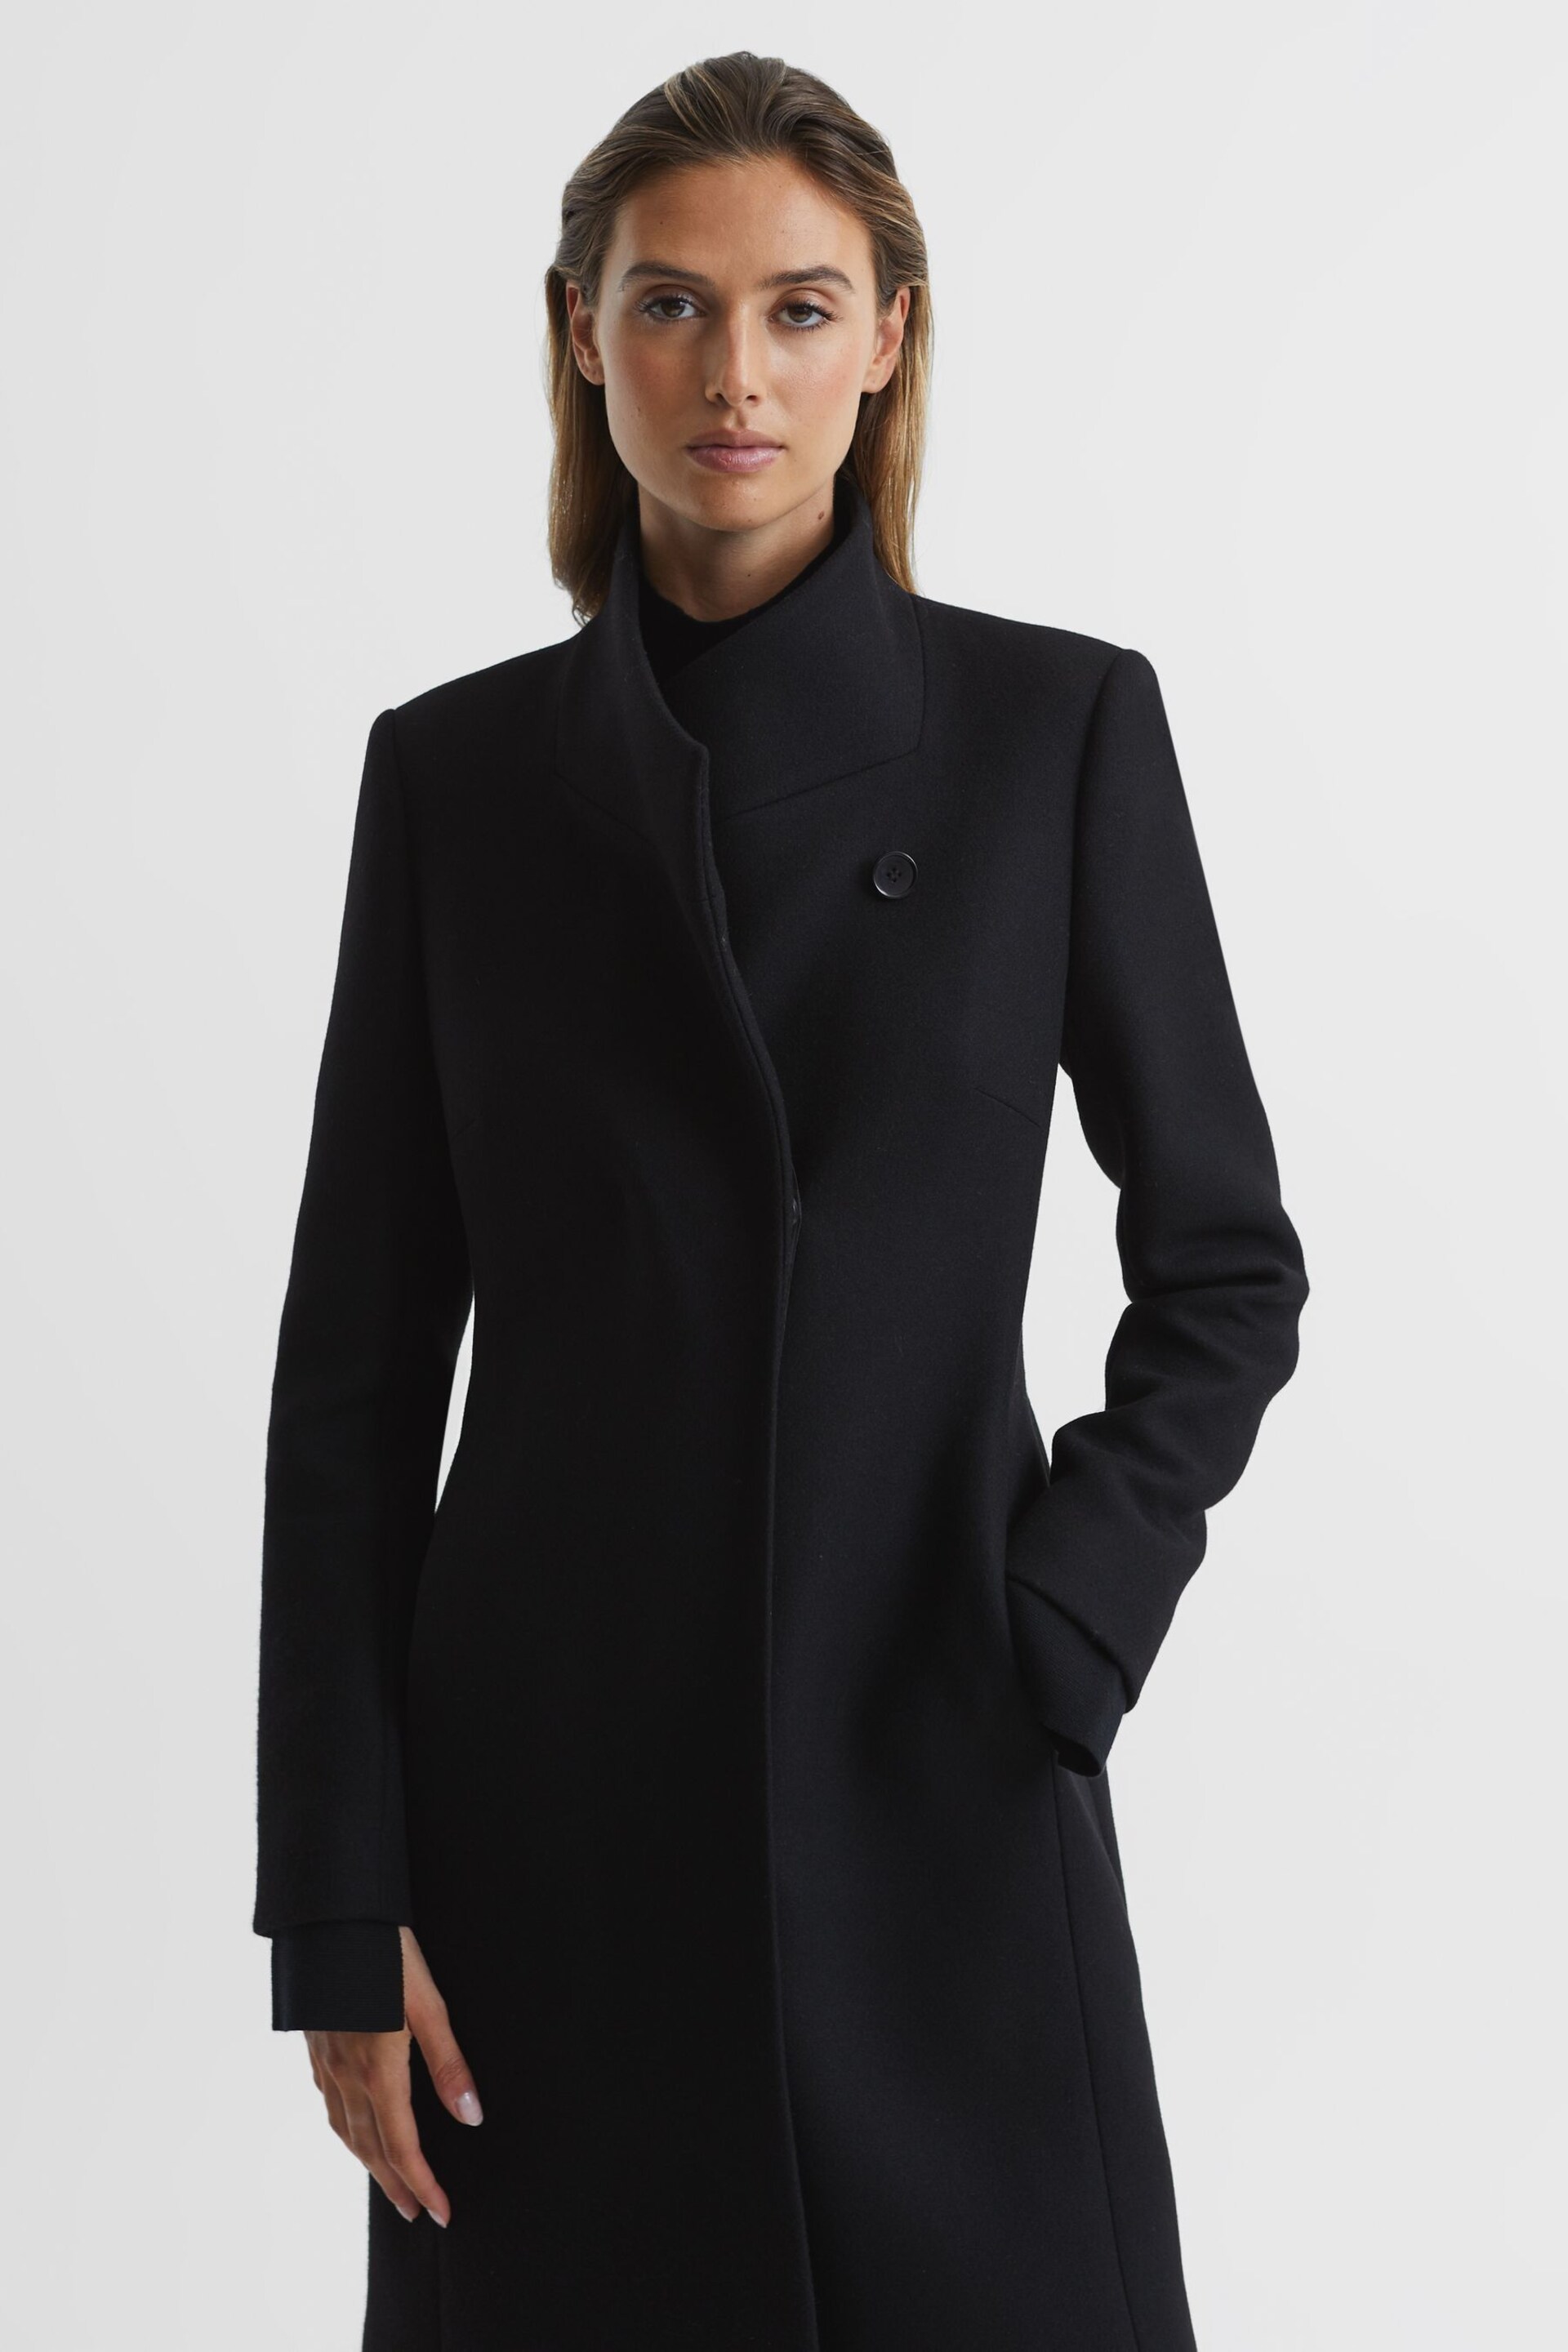 Reiss Black Mia Petite Wool Blend Mid-Length Coat - Image 4 of 7